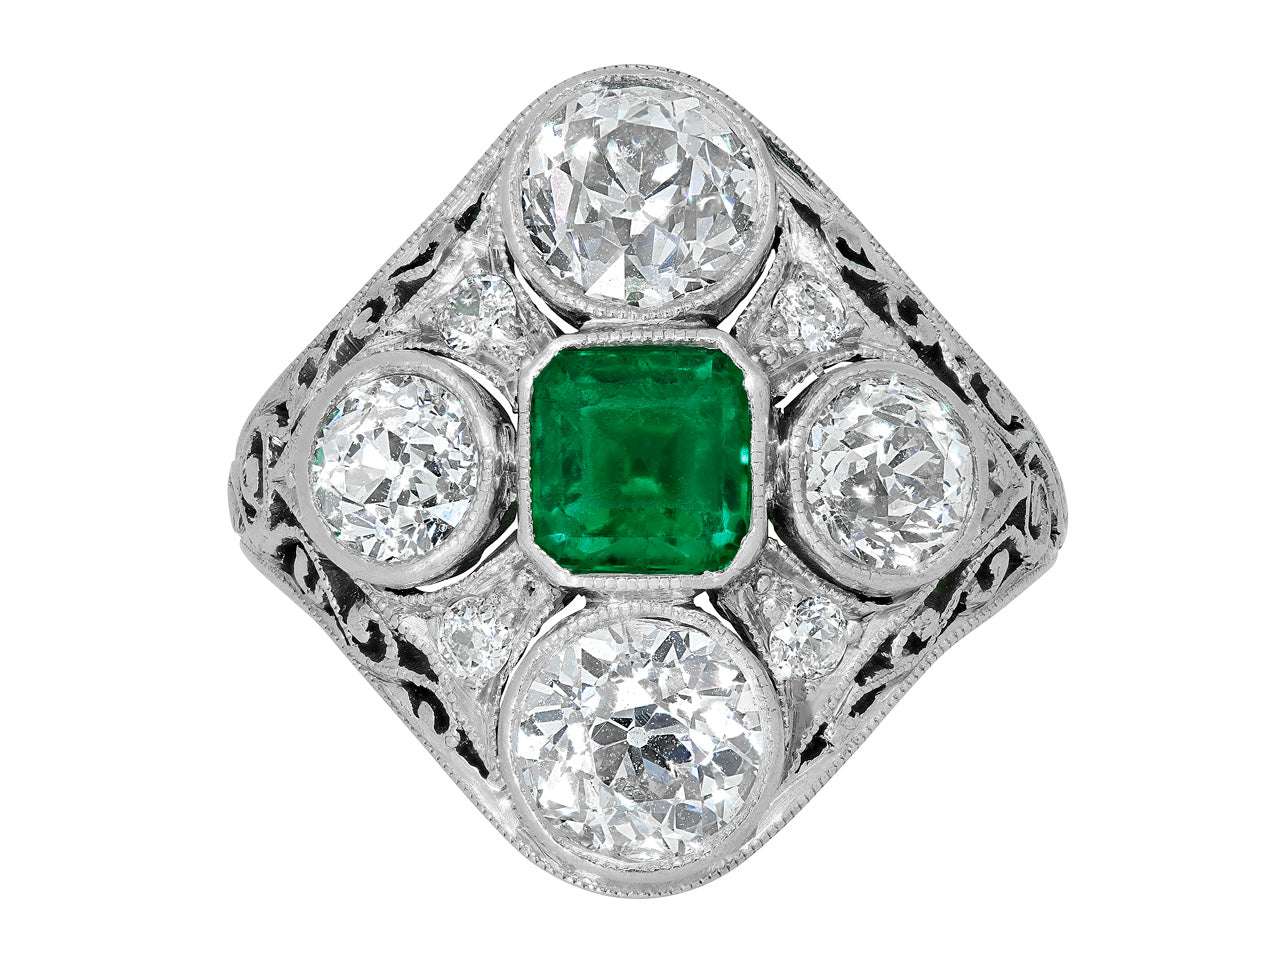 Antique Edwardian Emerald and Diamond Ring in Platinum